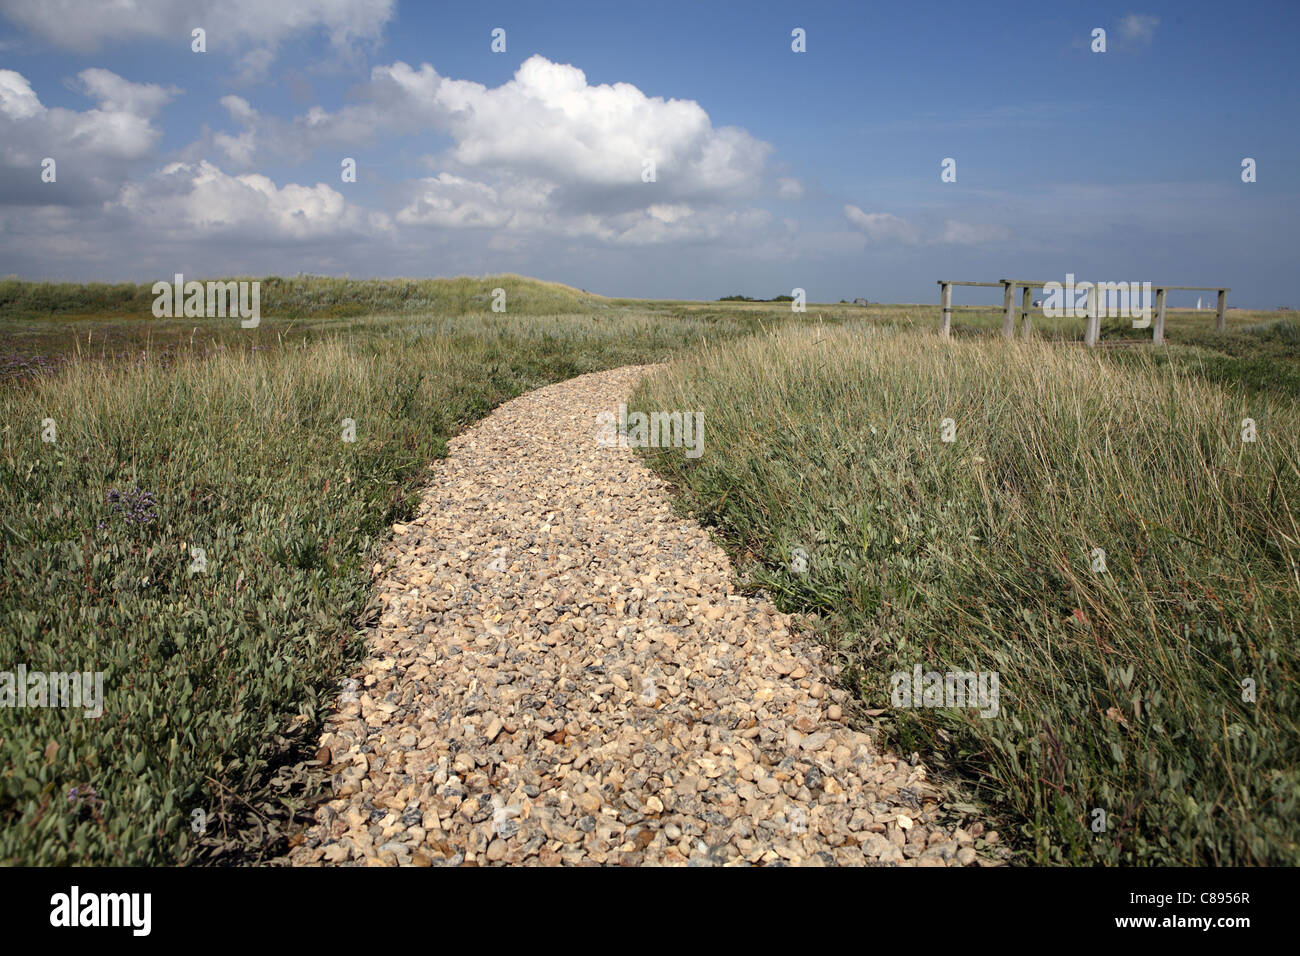 Shingle path leading ahead to vanishing point on horizon, RSBP Bird Reserve, Havergate Island, Suffolk, UK Stock Photo